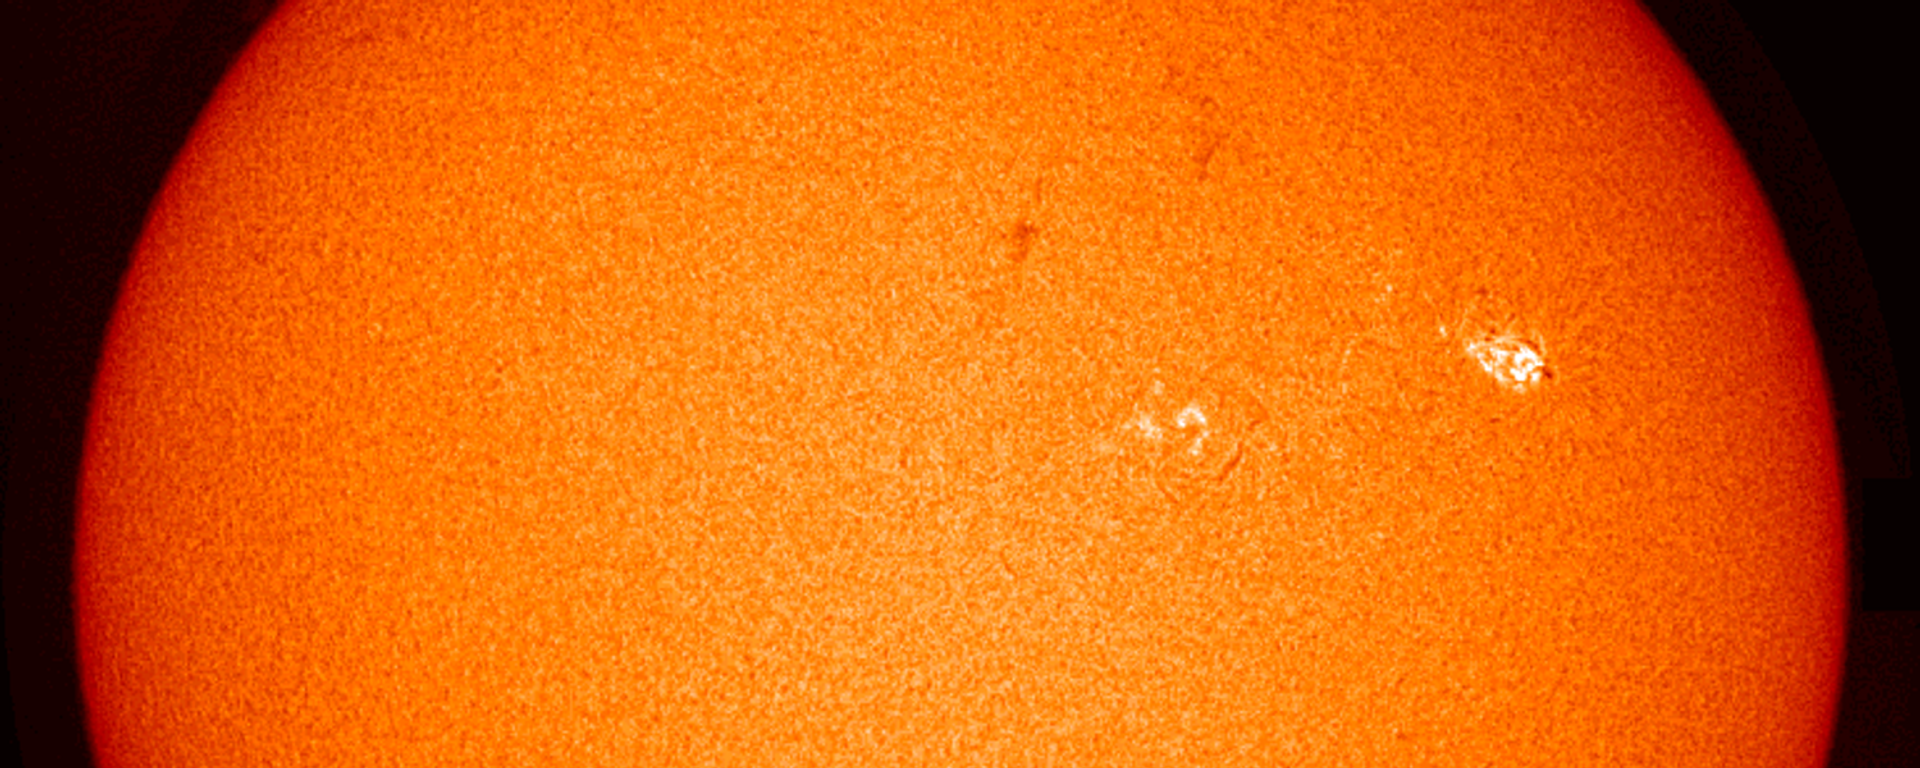 Image of the Sun, taken March 21, showing a spike in solar activity. - Sputnik International, 1920, 20.07.2022